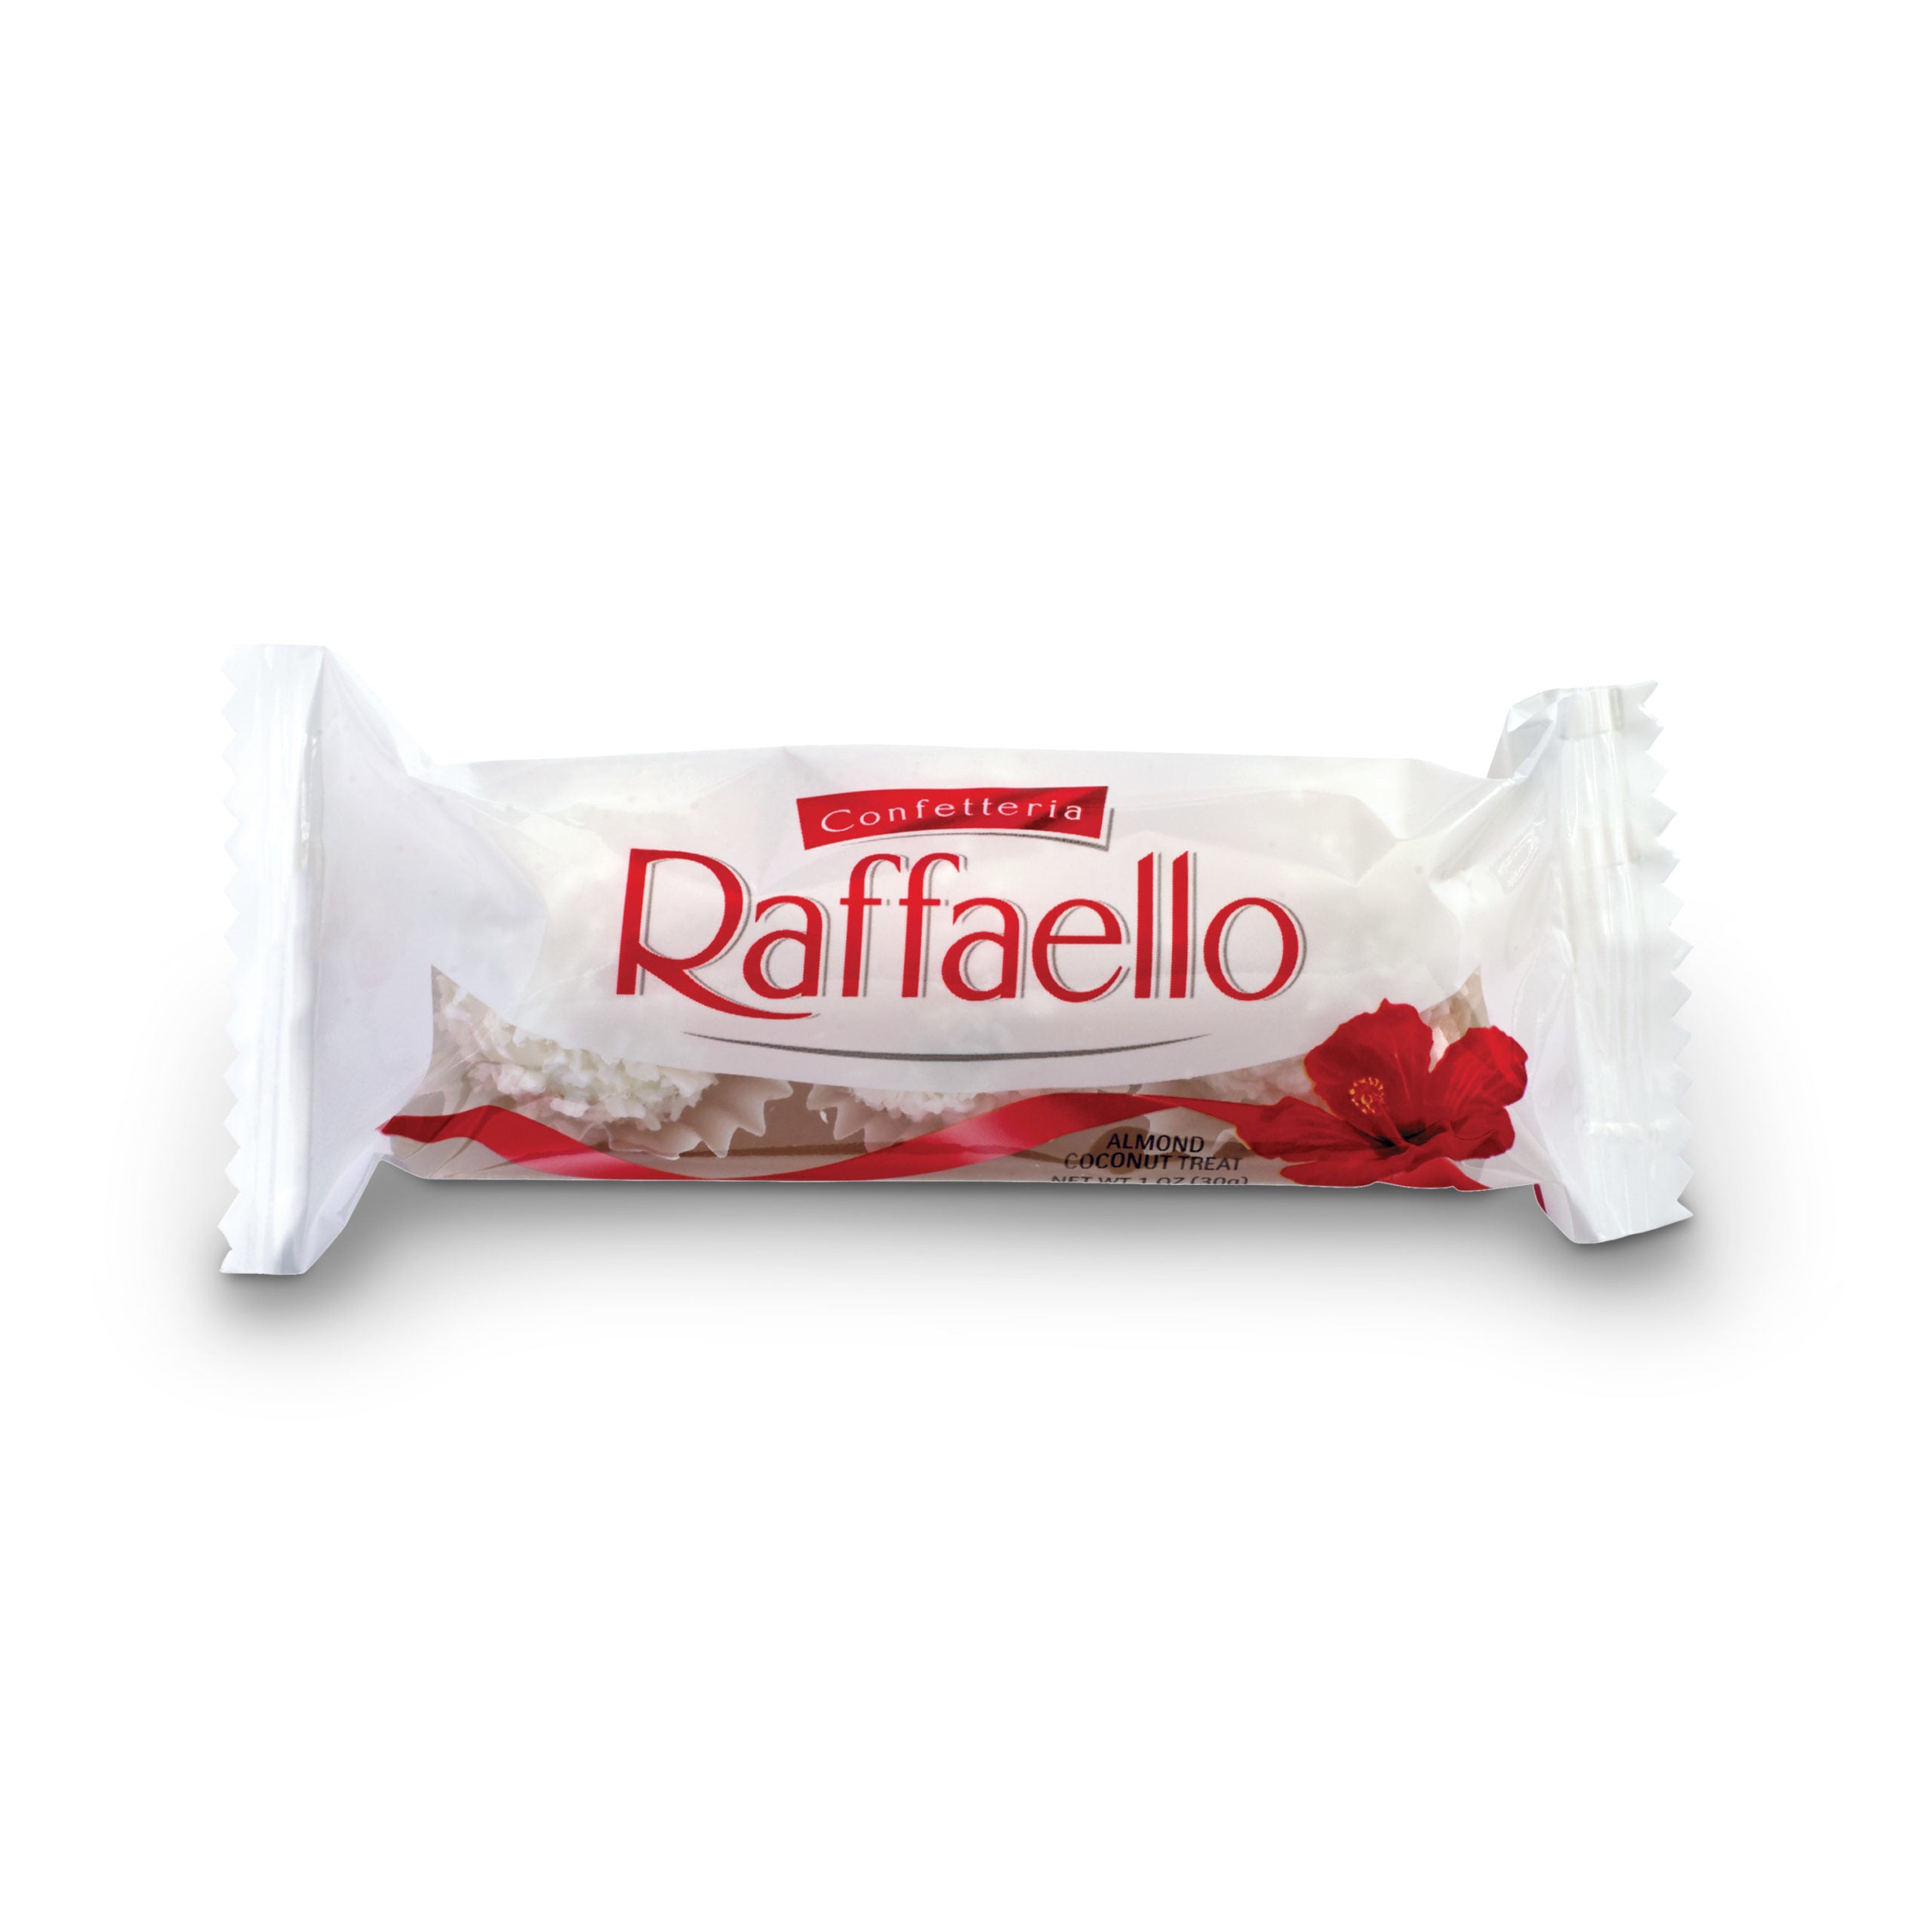 Raffaello 40 gram